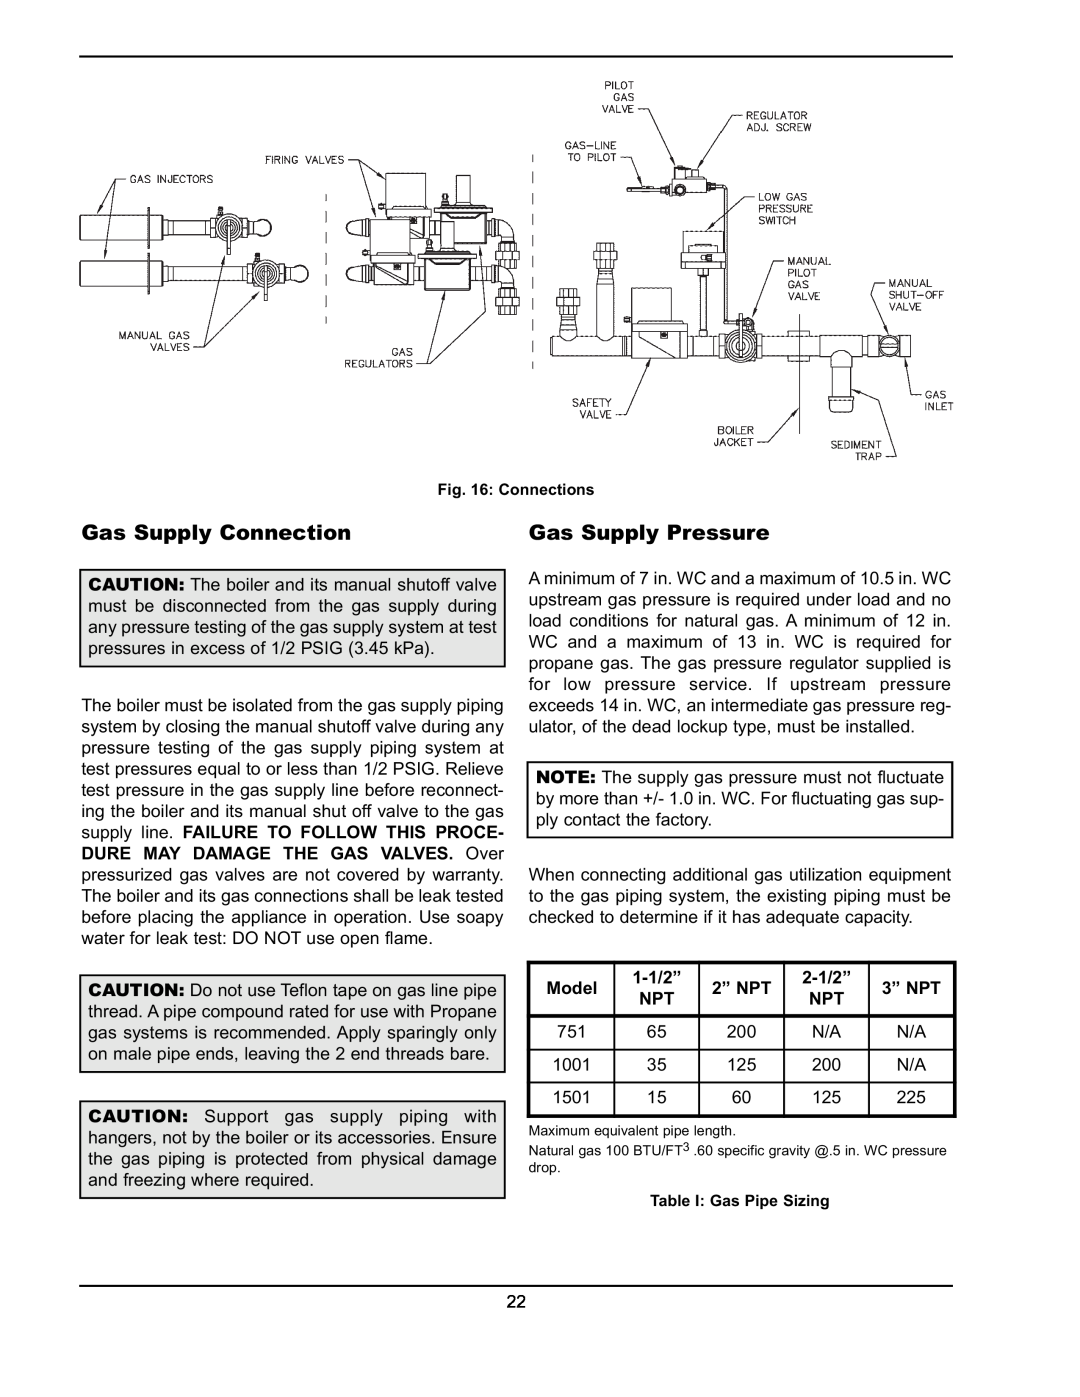 Raypak 751 manual Gas Supply Connection, Gas Supply Pressure, Model, 1-1/2”, 2” NPT, 2-1/2”, 3” NPT 